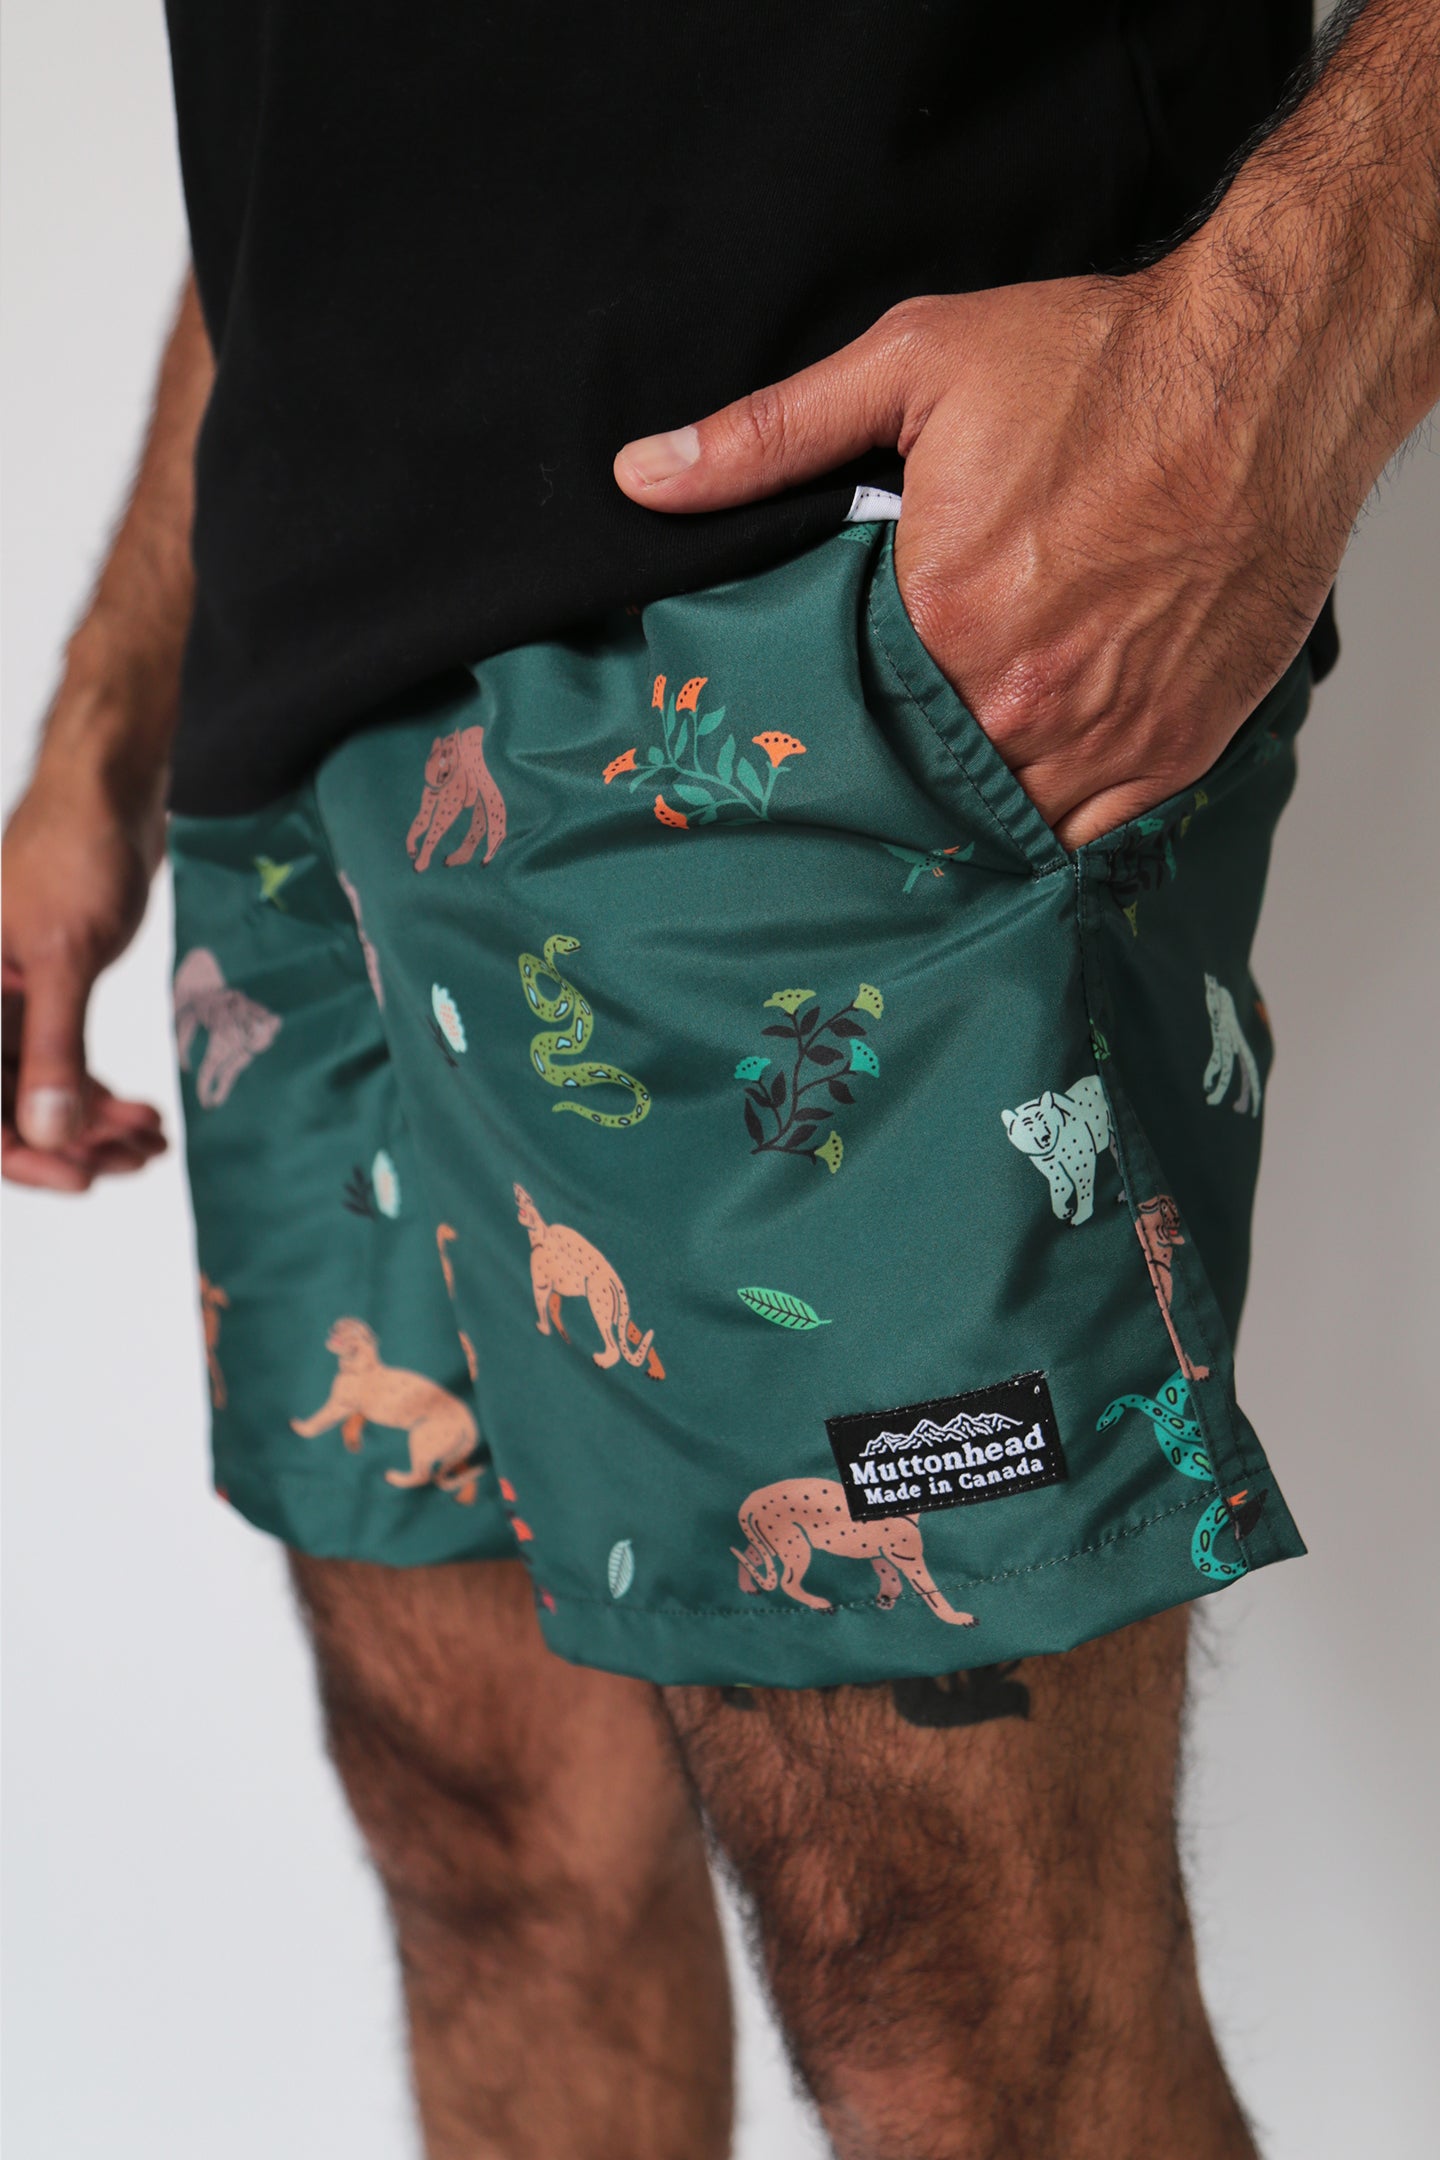 Swim Shorts - Wild Forest Bather